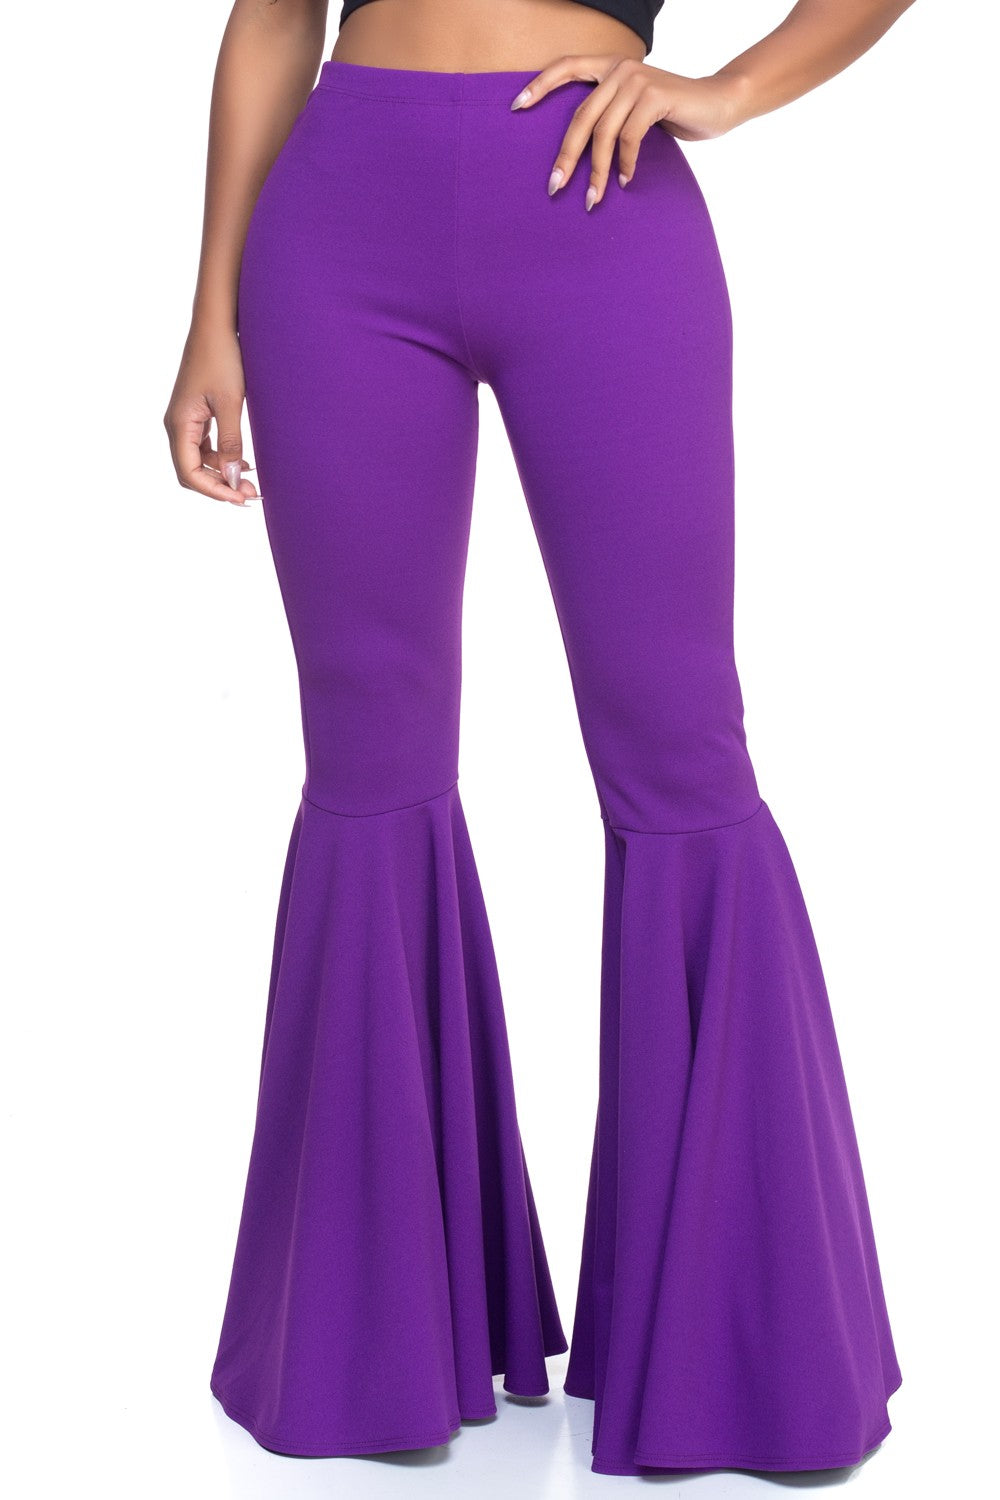 Plus Size Purple Ruffled Flare High Waist Pants-Plus Size Dream Girl